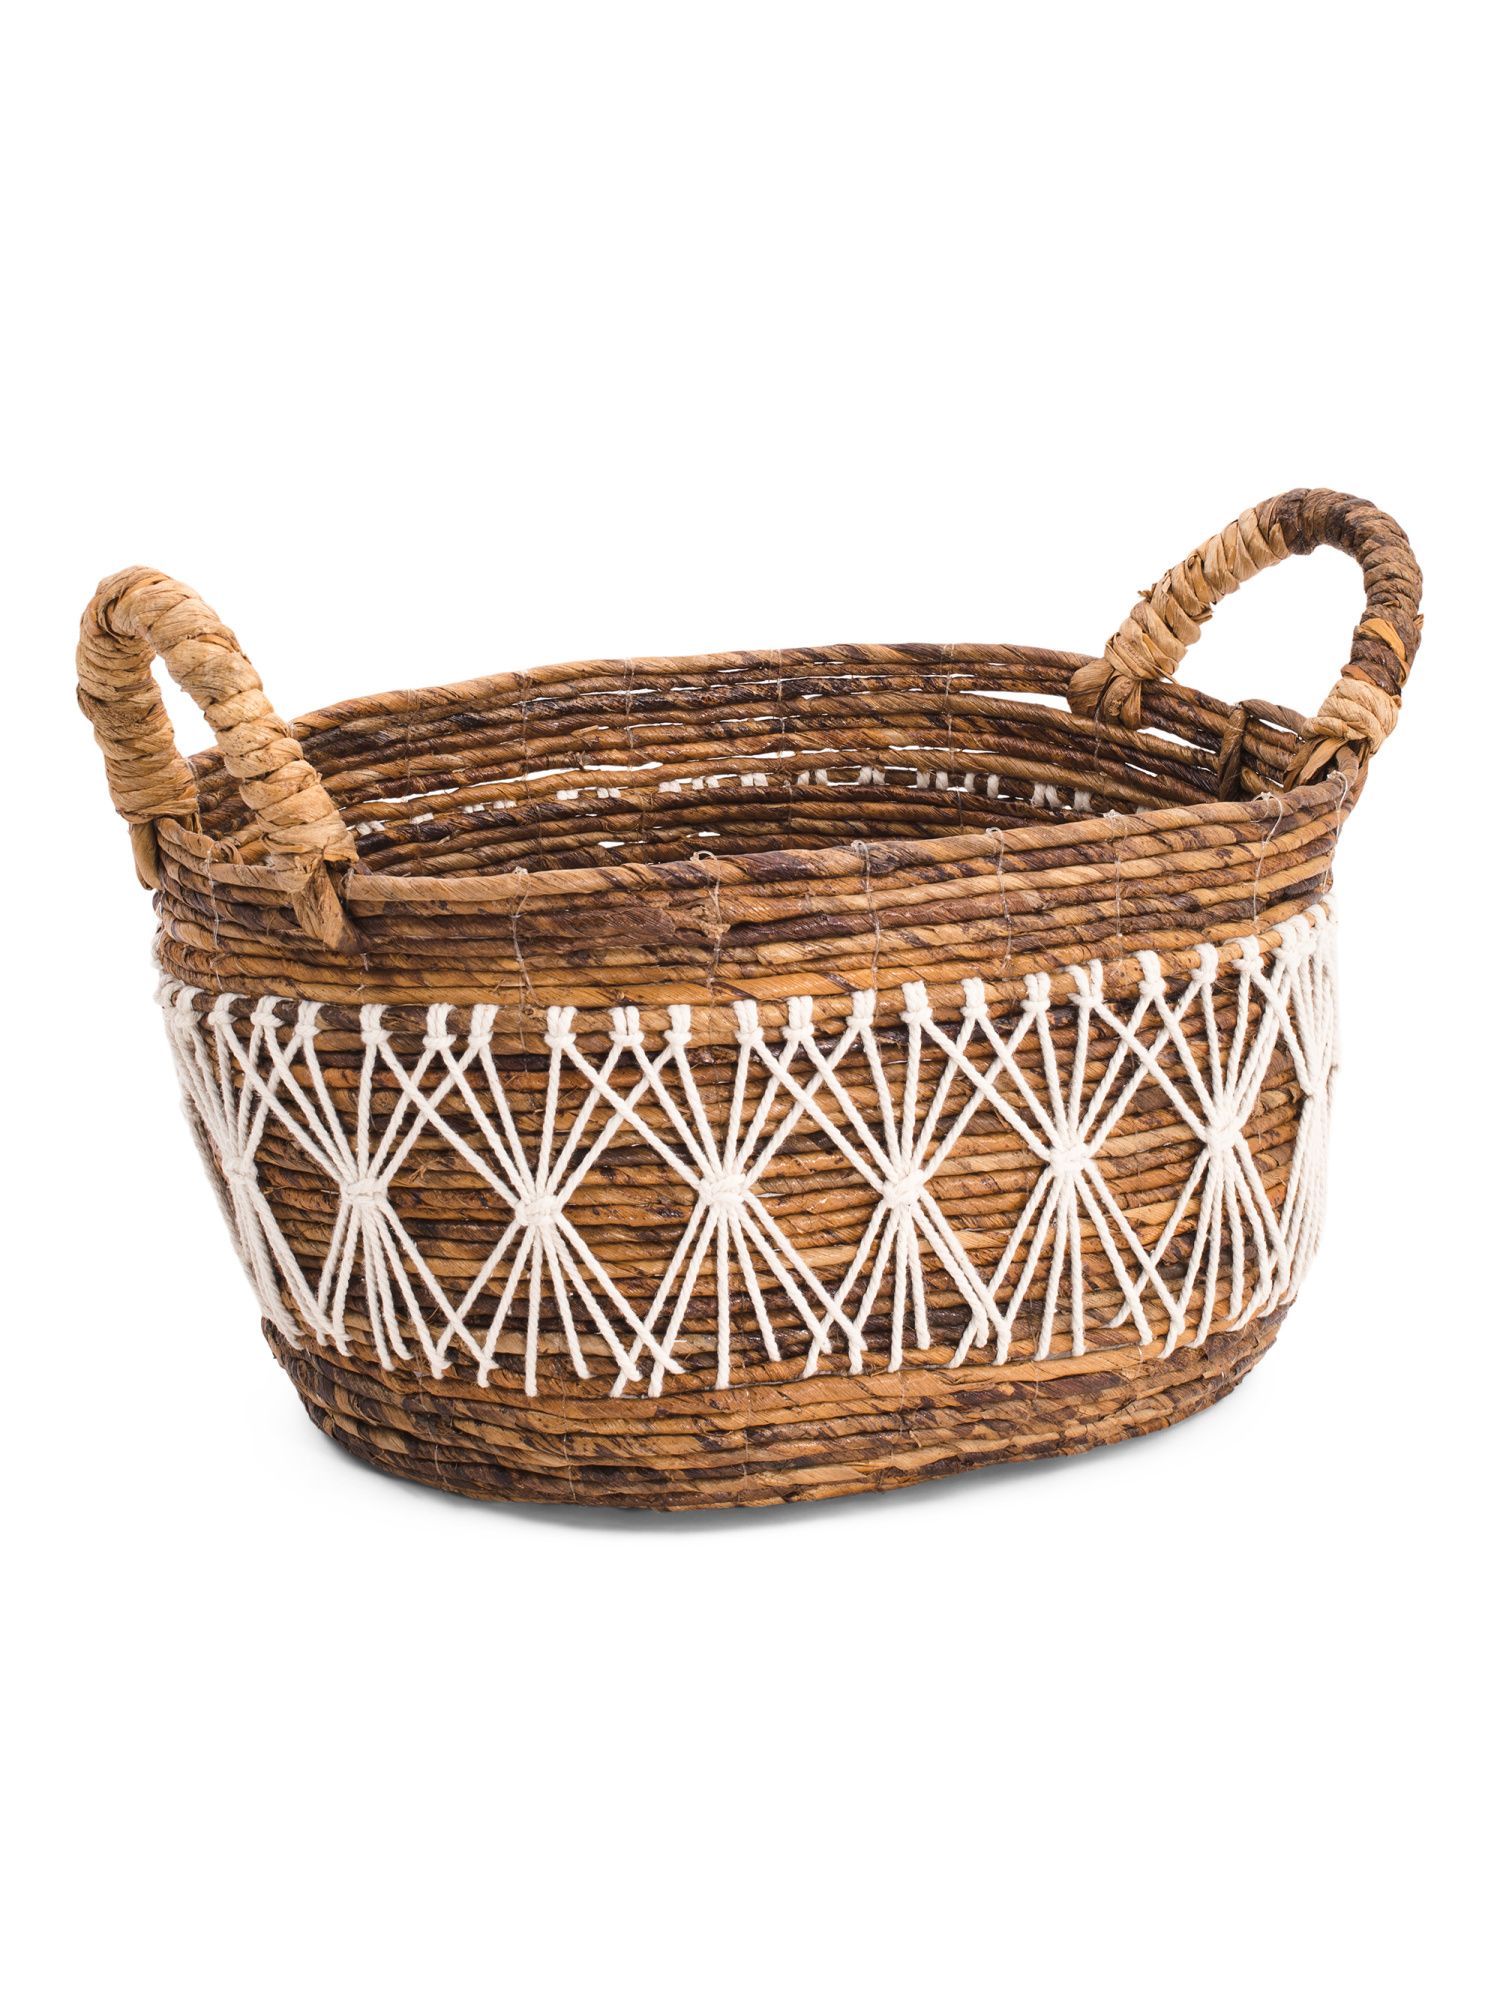 Medium Banana Oval Basket With Macrame Detail | Home | T.J.Maxx | TJ Maxx